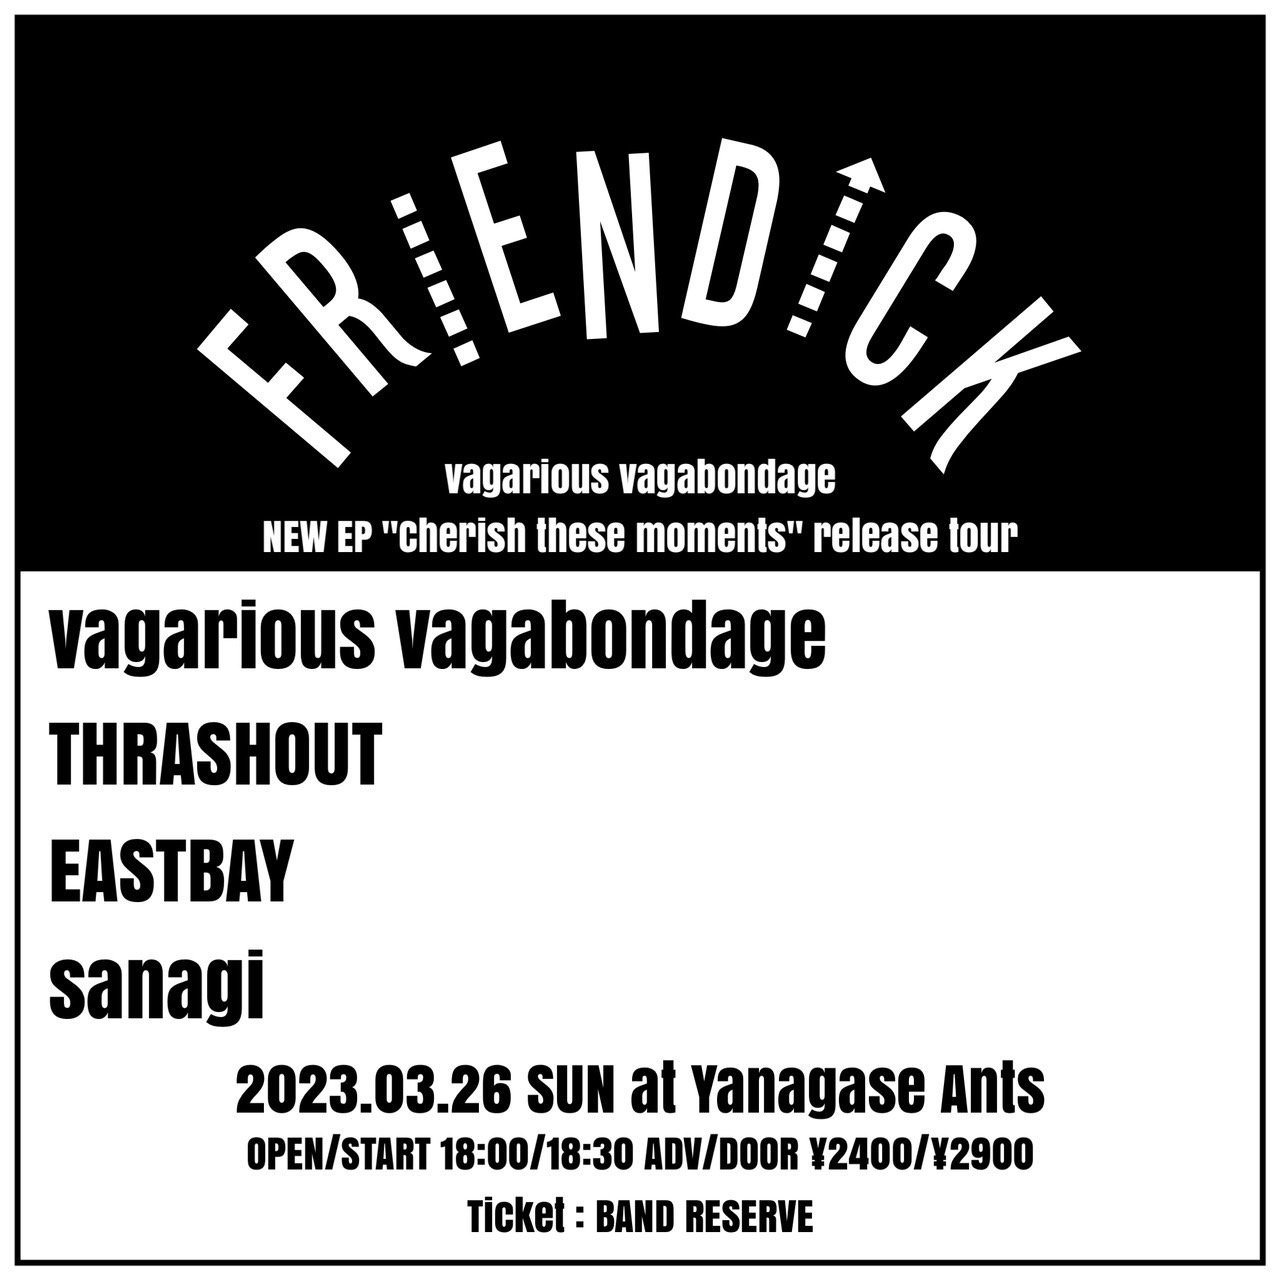 “FRIENDICK” vagarious vagabondage NEW EP “Cherish these moments” release tourの写真